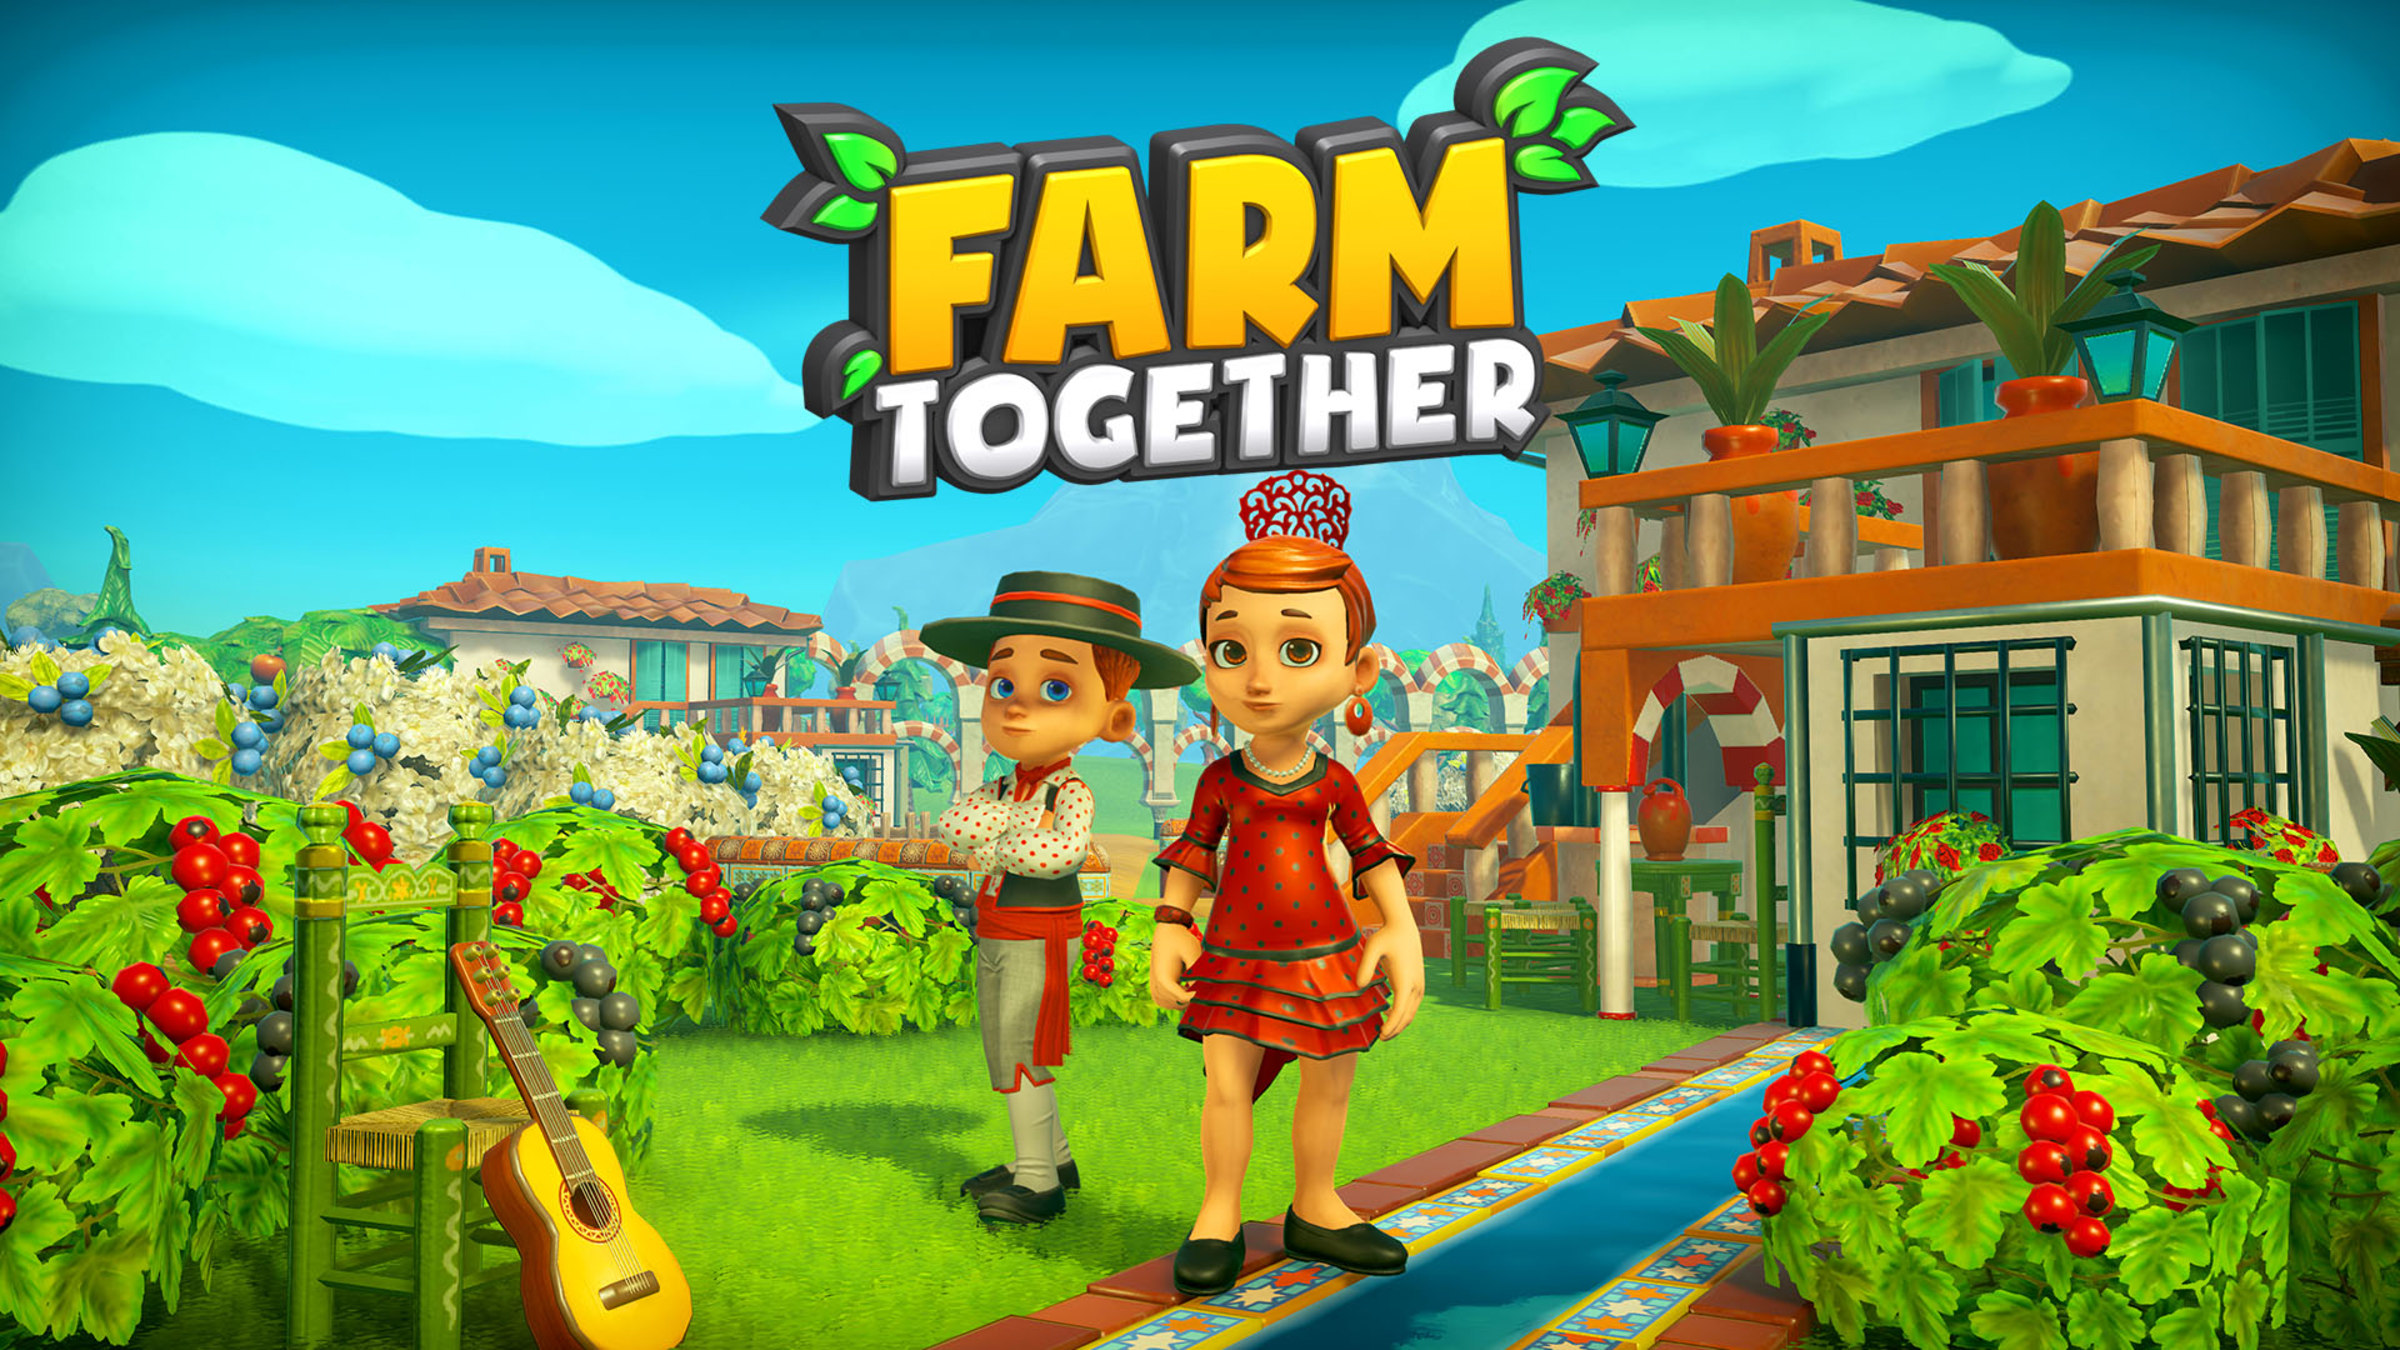 Игра Farm together. Farm together обложка. Farm together Switch. Nintendo Farm together.